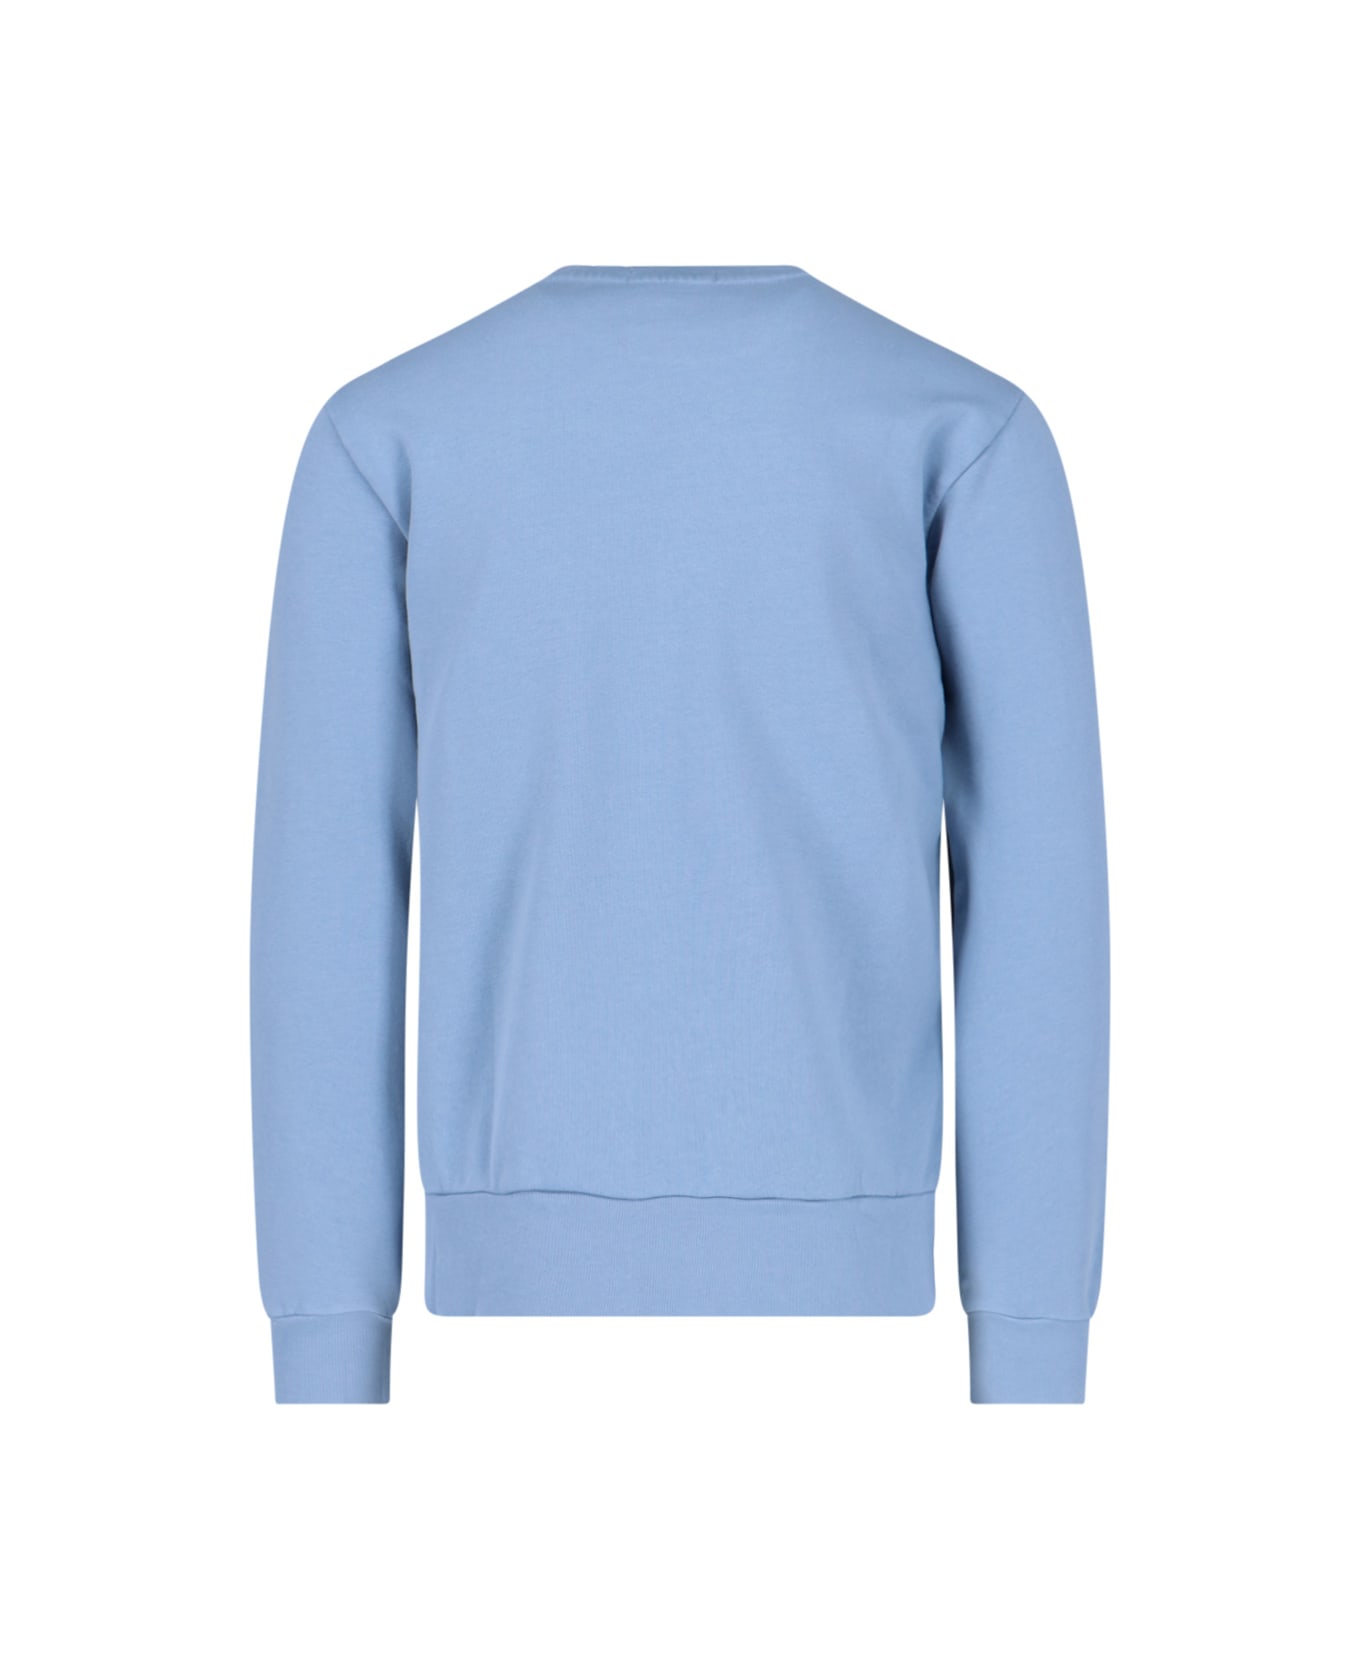 Polo Ralph Lauren Logo Crewneck Sweatshirt - BLUE